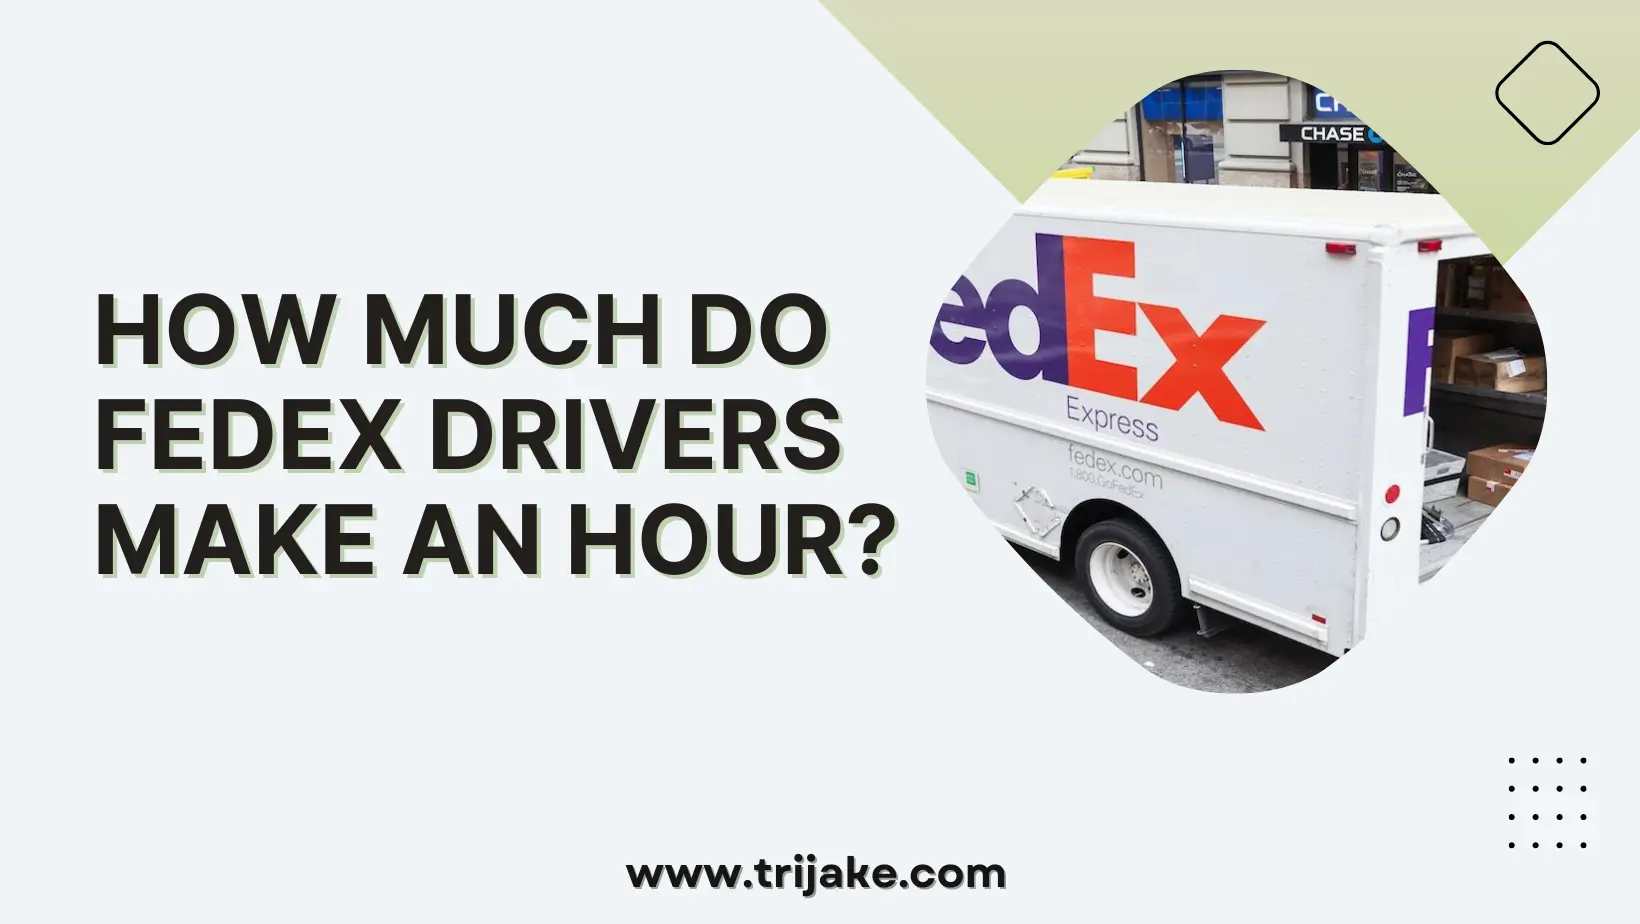 How Much Do FedEx Drivers Make an Hour